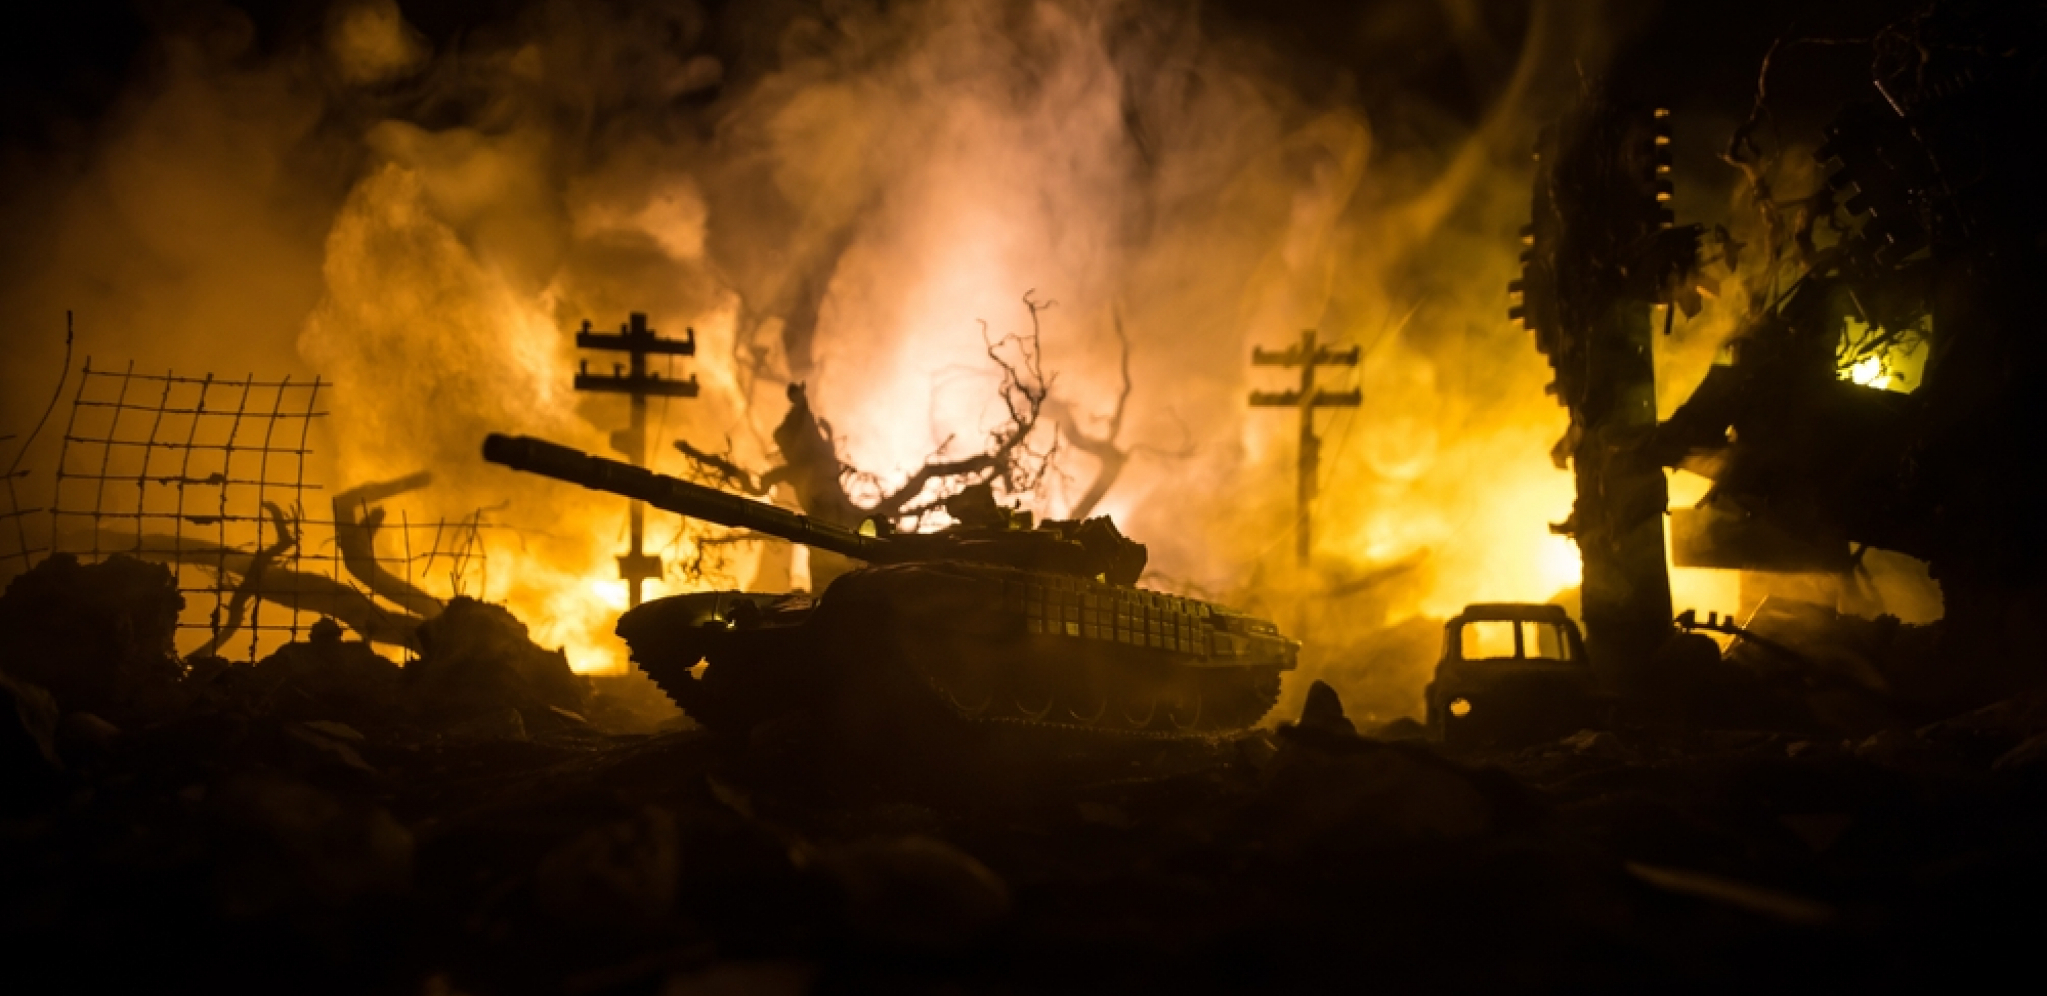 KO JE KRIV? Dok preti stravična katastrofa, Kijev i Moskva međusobno razmenjuju optužbe